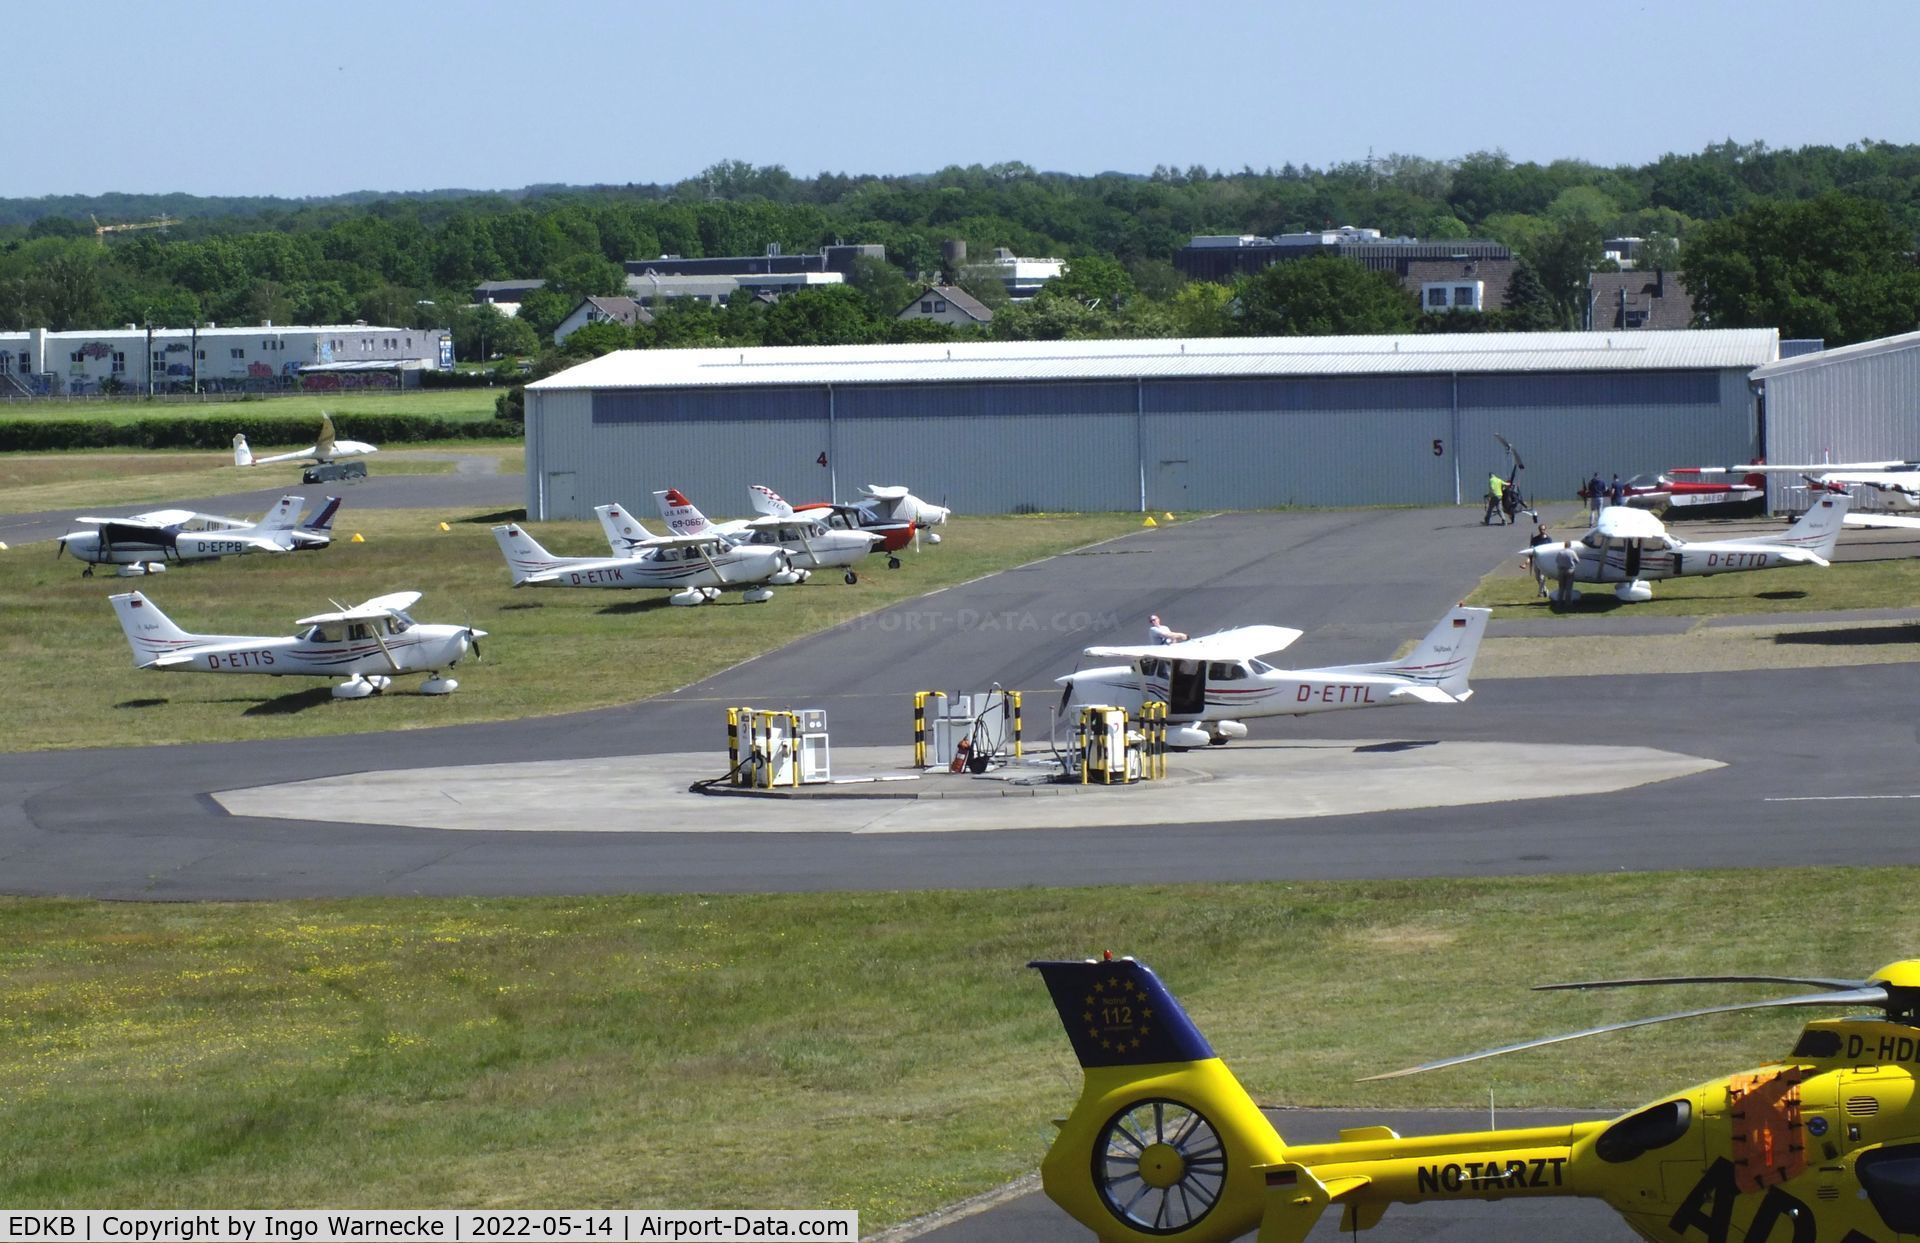 Bonn-Hangelar Airport, Sankt Augustin Germany (EDKB) - apron, hangars and airfield fuelling station at Bonn-Hangelar airfield